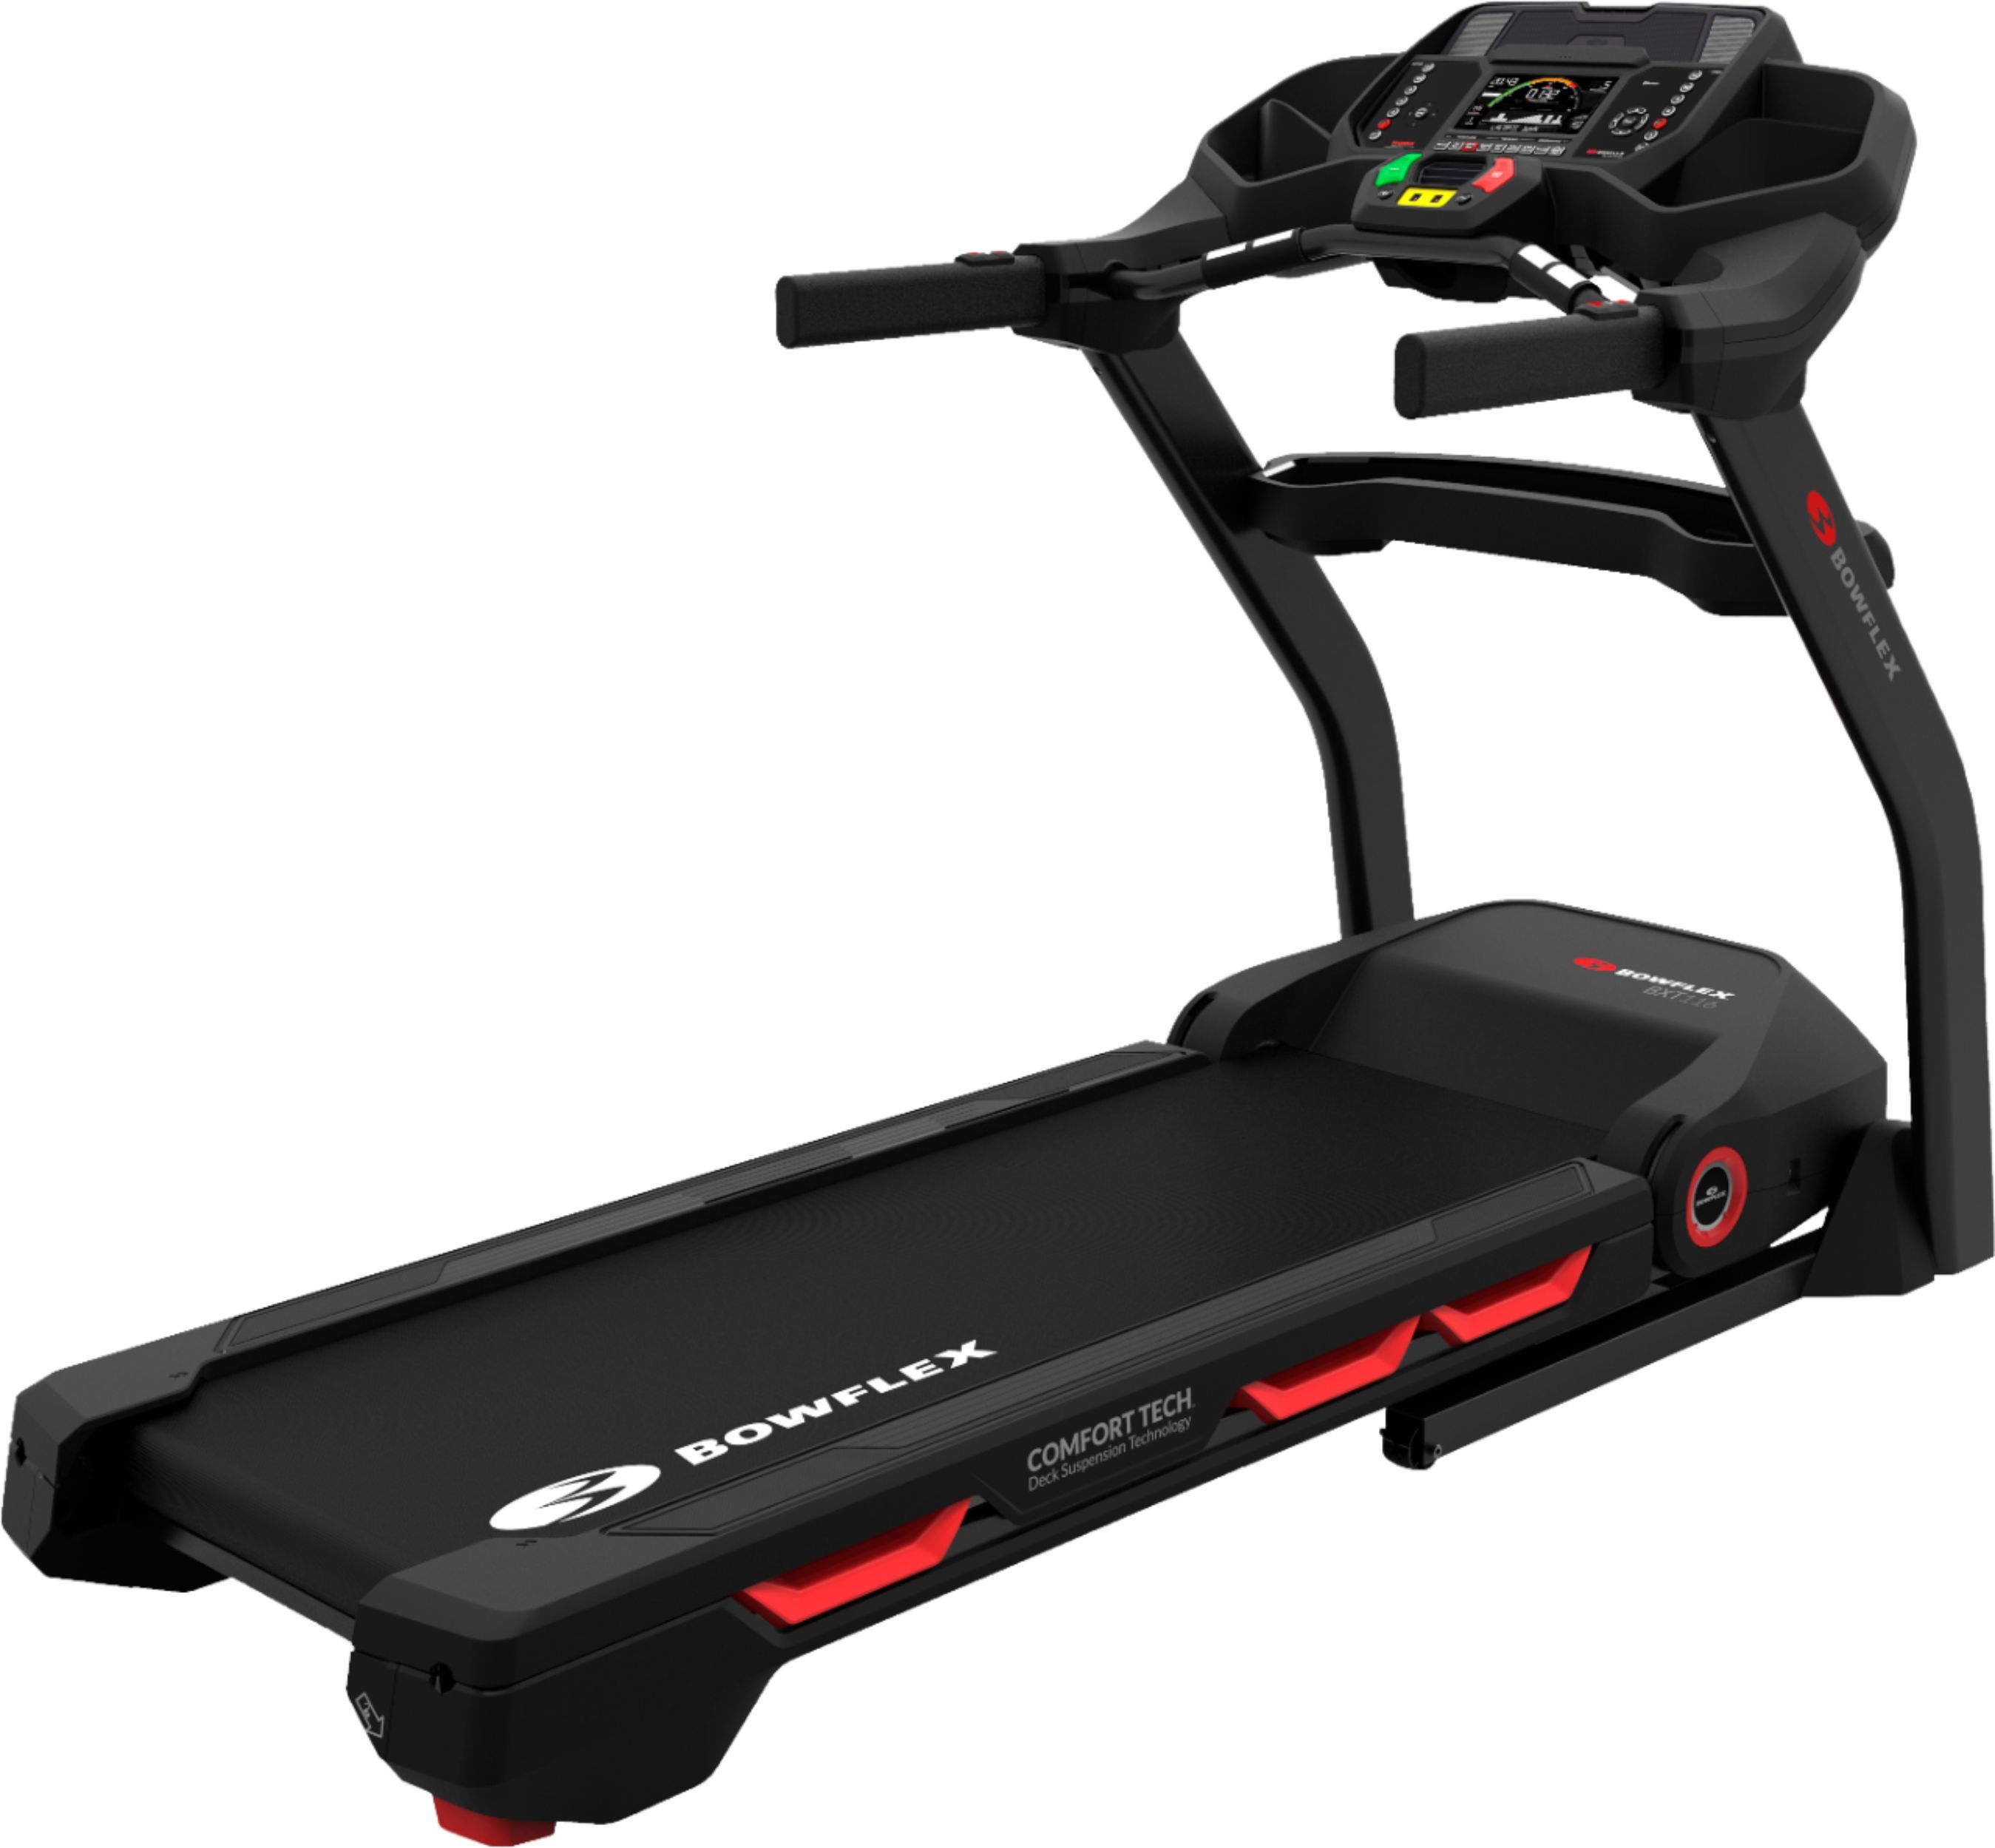 Bowflex BXT116 Treadmill Black 100501 - Best Buy | Best Buy U.S.